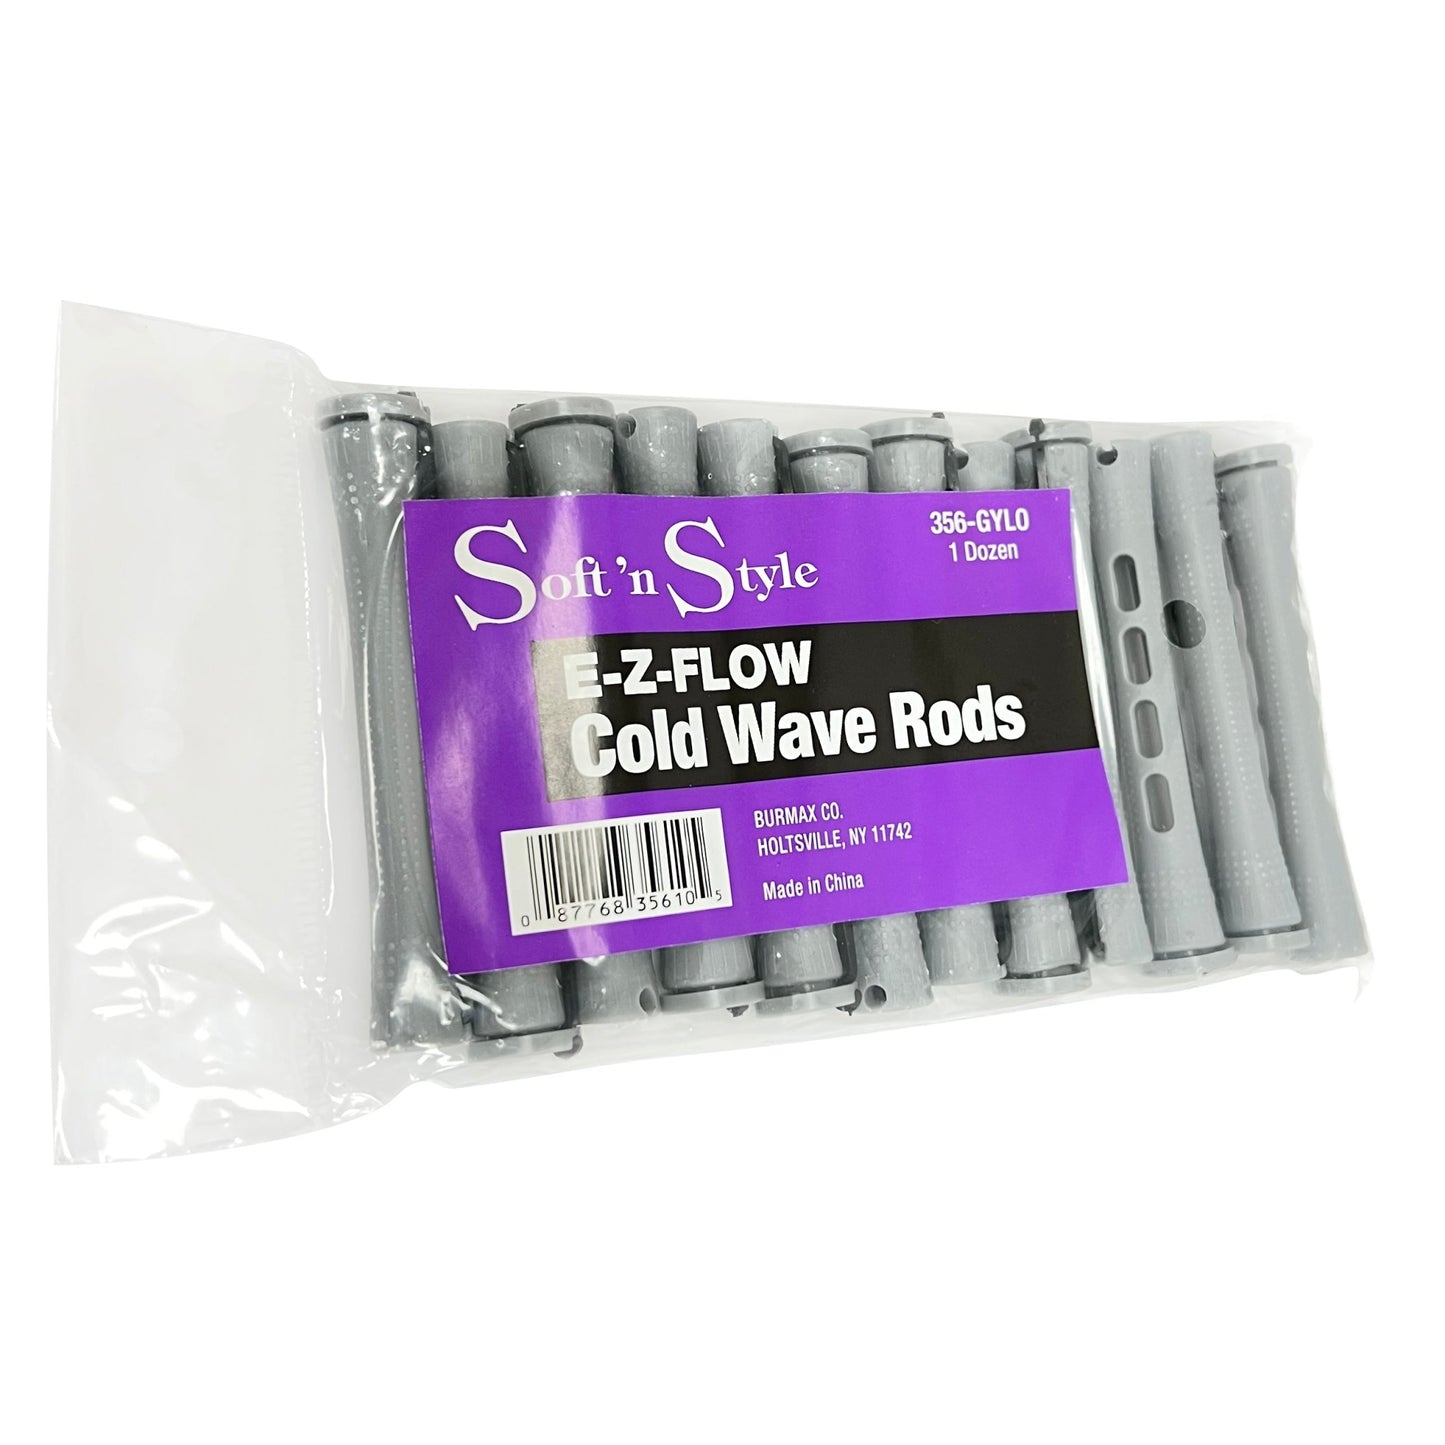 E-Z-Flow Cold Wave Rods | 1 Dozen | 356-GYLO | SOFT N STYLE - SH Salons